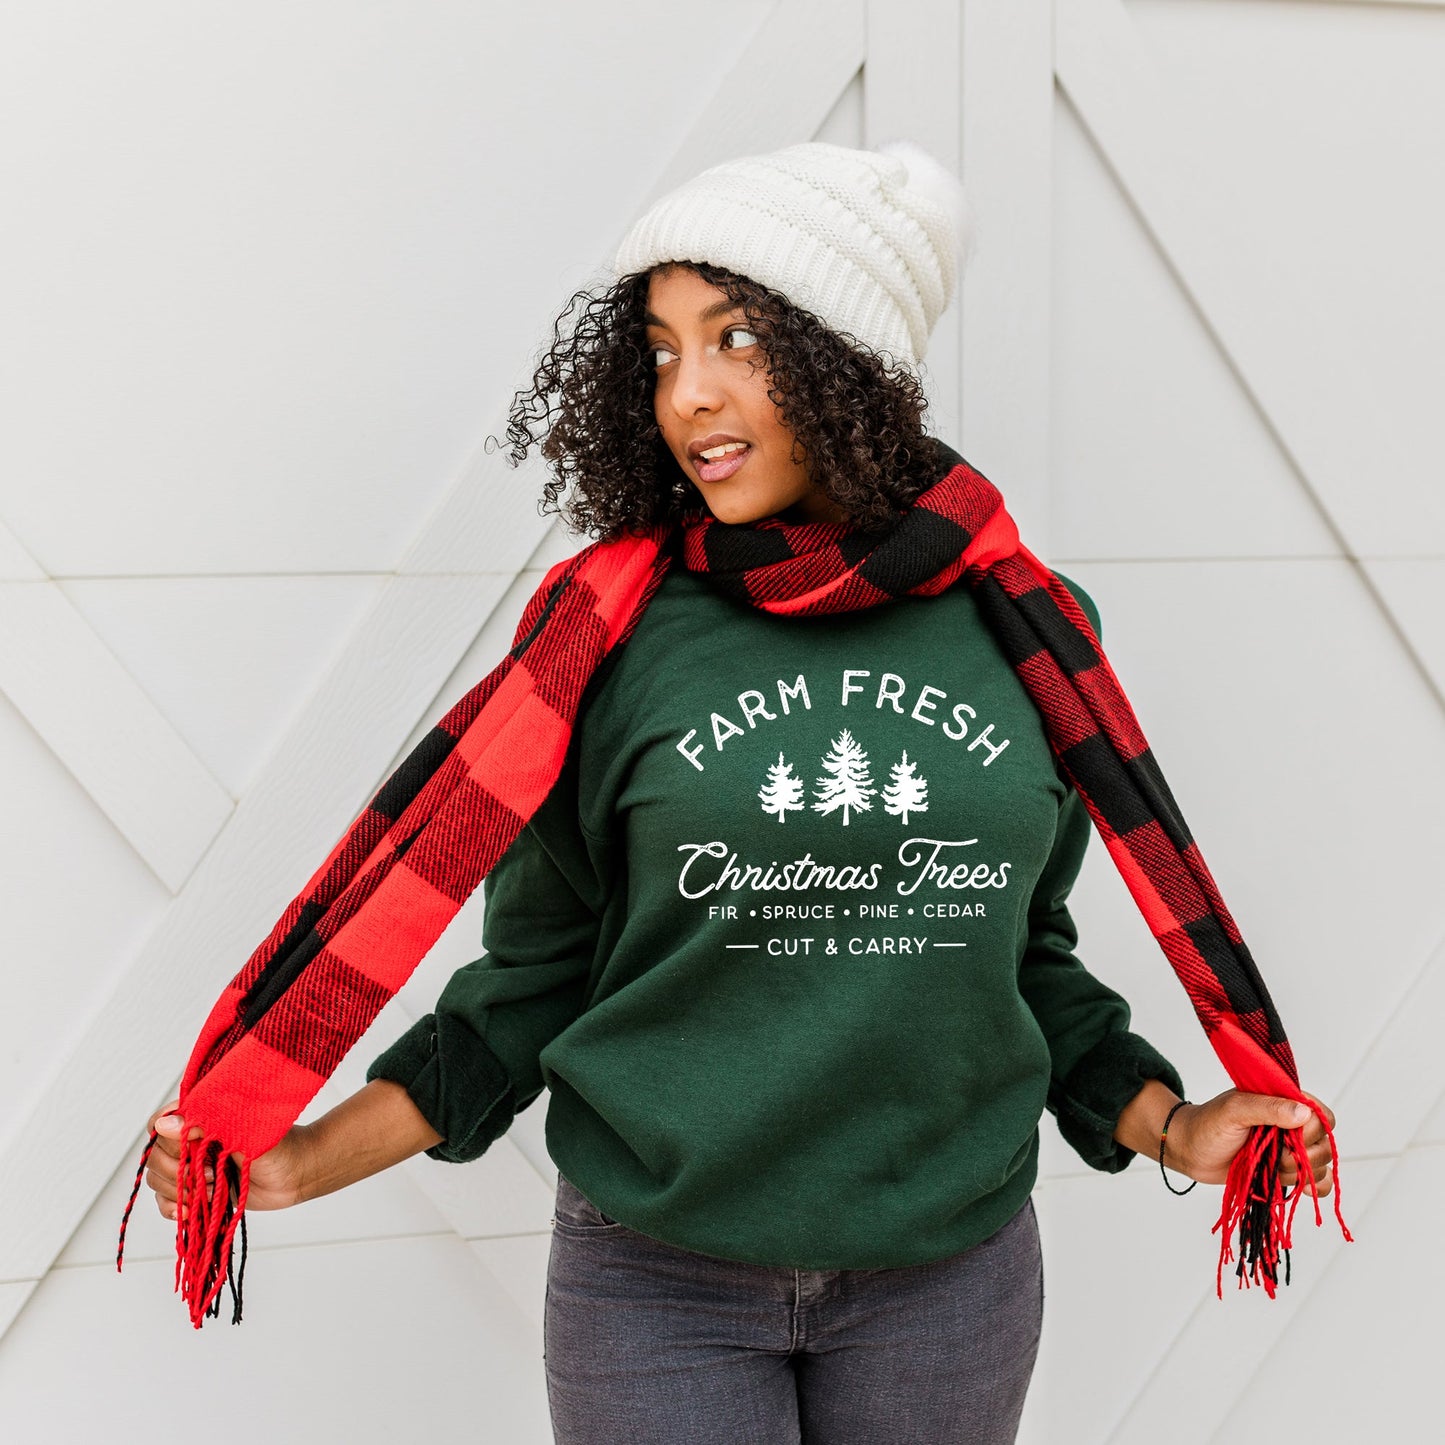 Clearance Farm Fresh Christmas Trees | Sweatshirt